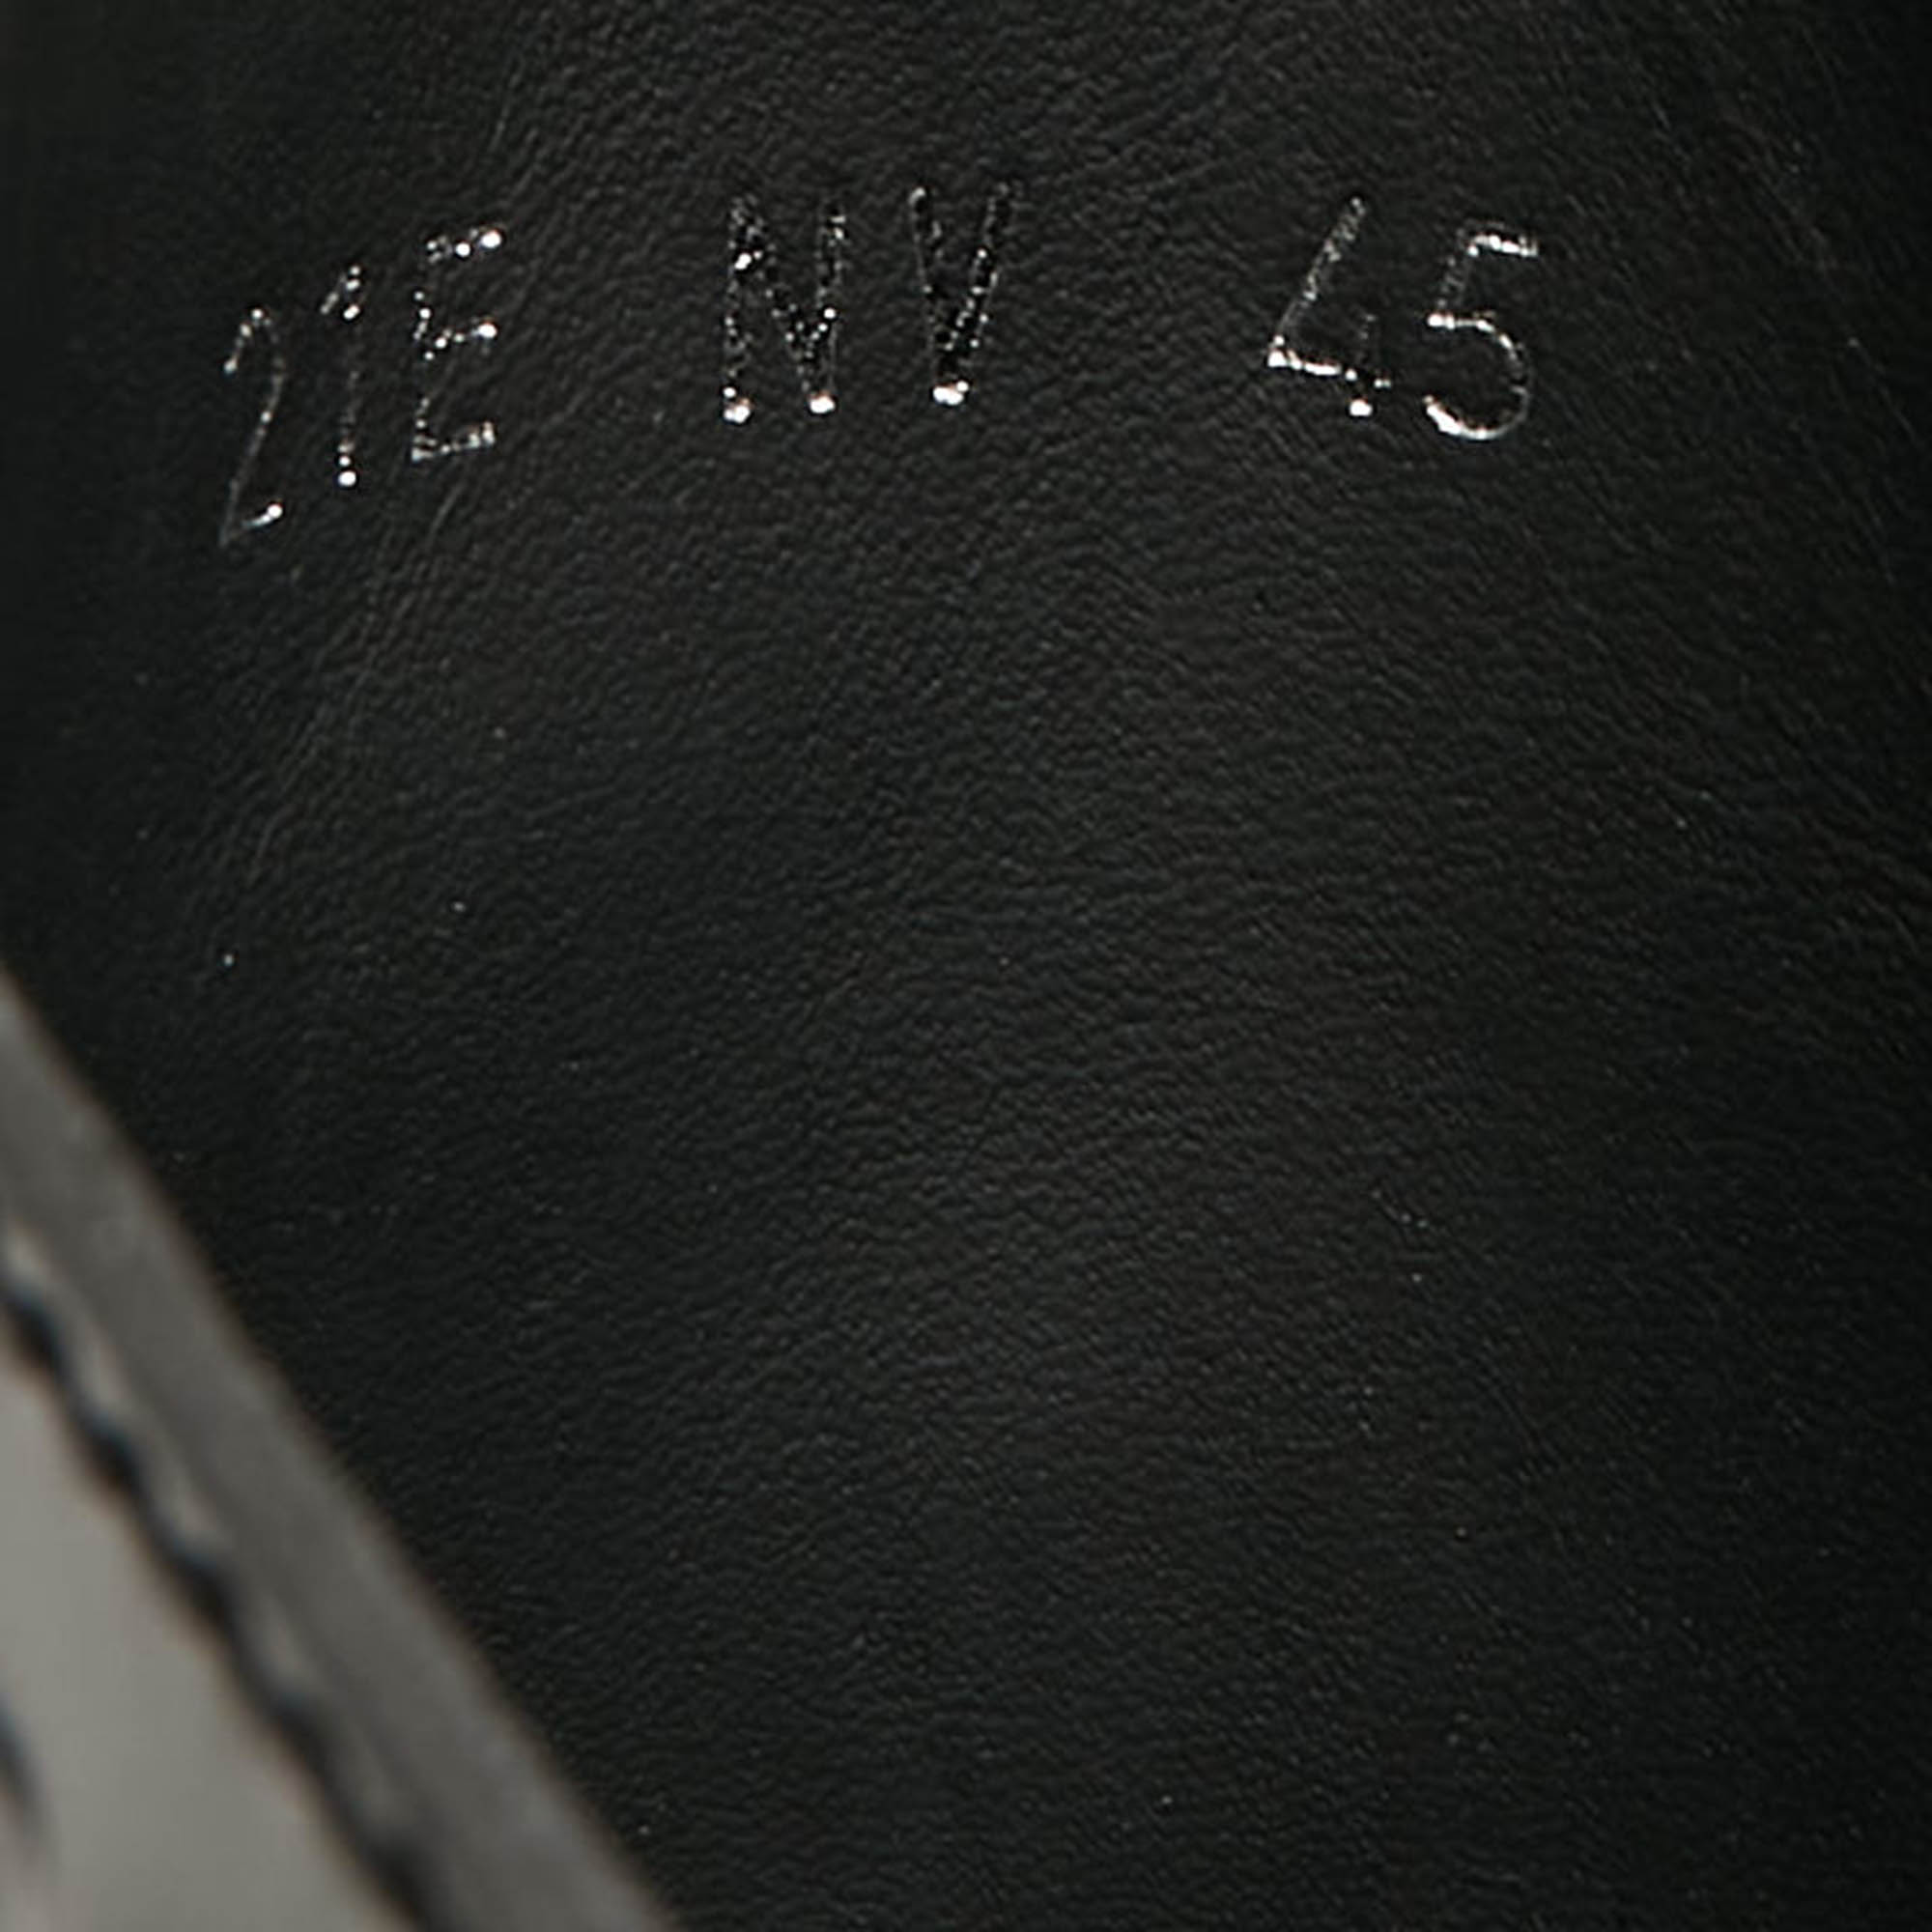 Dior Black Oblique Embossed Leather Explorer II Combat Boots Size 45